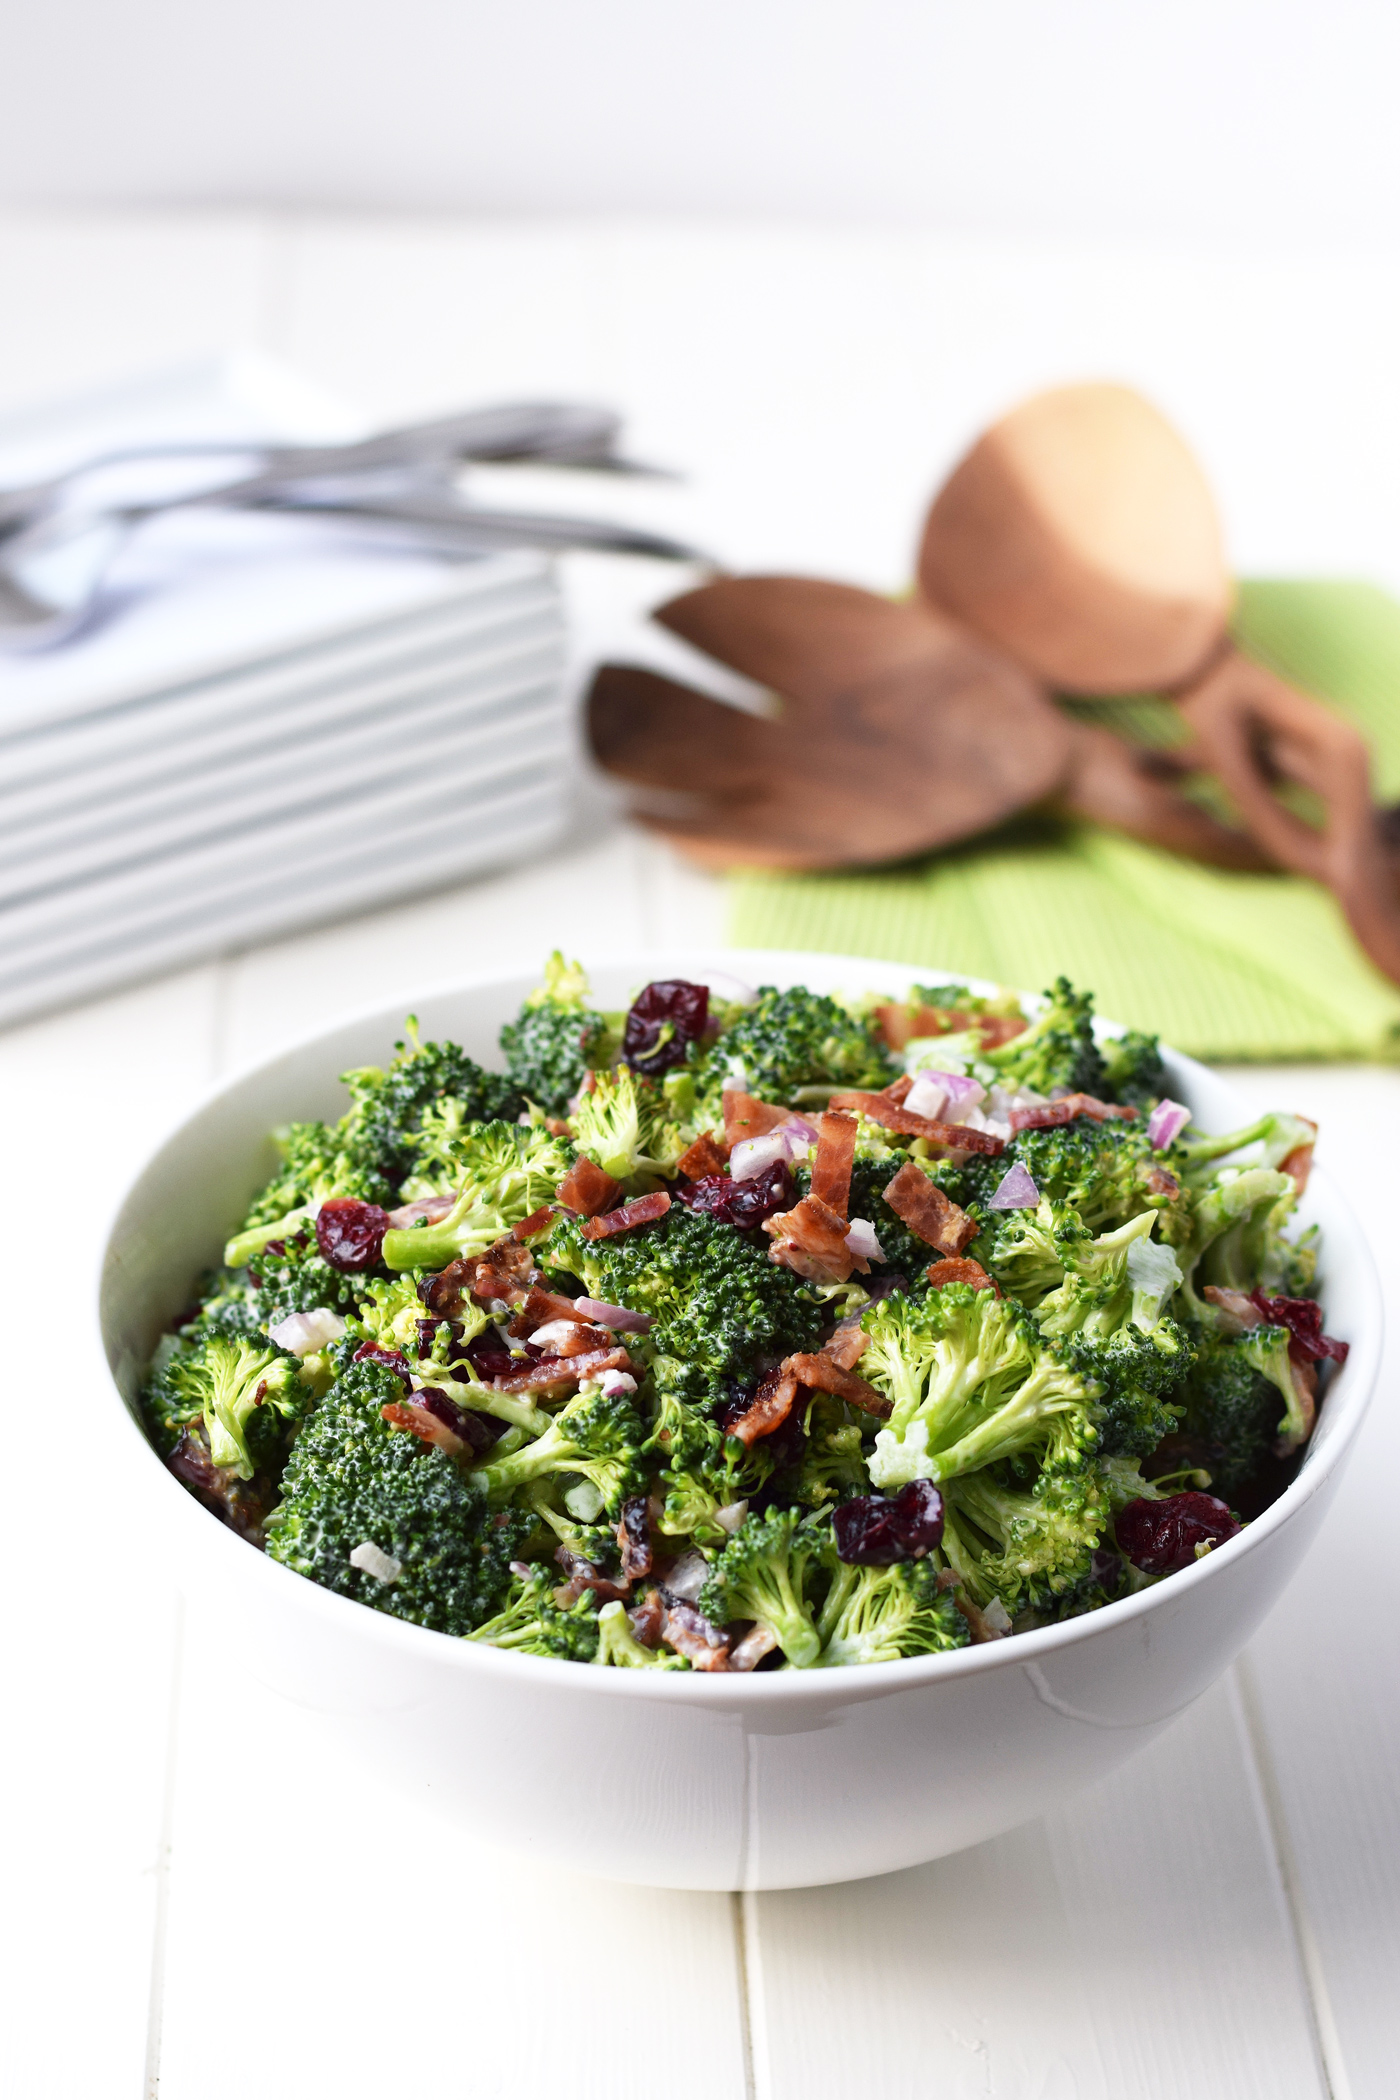 Lightened Broccoli Salad - Your favorite broccoli salad recipe made healthy...